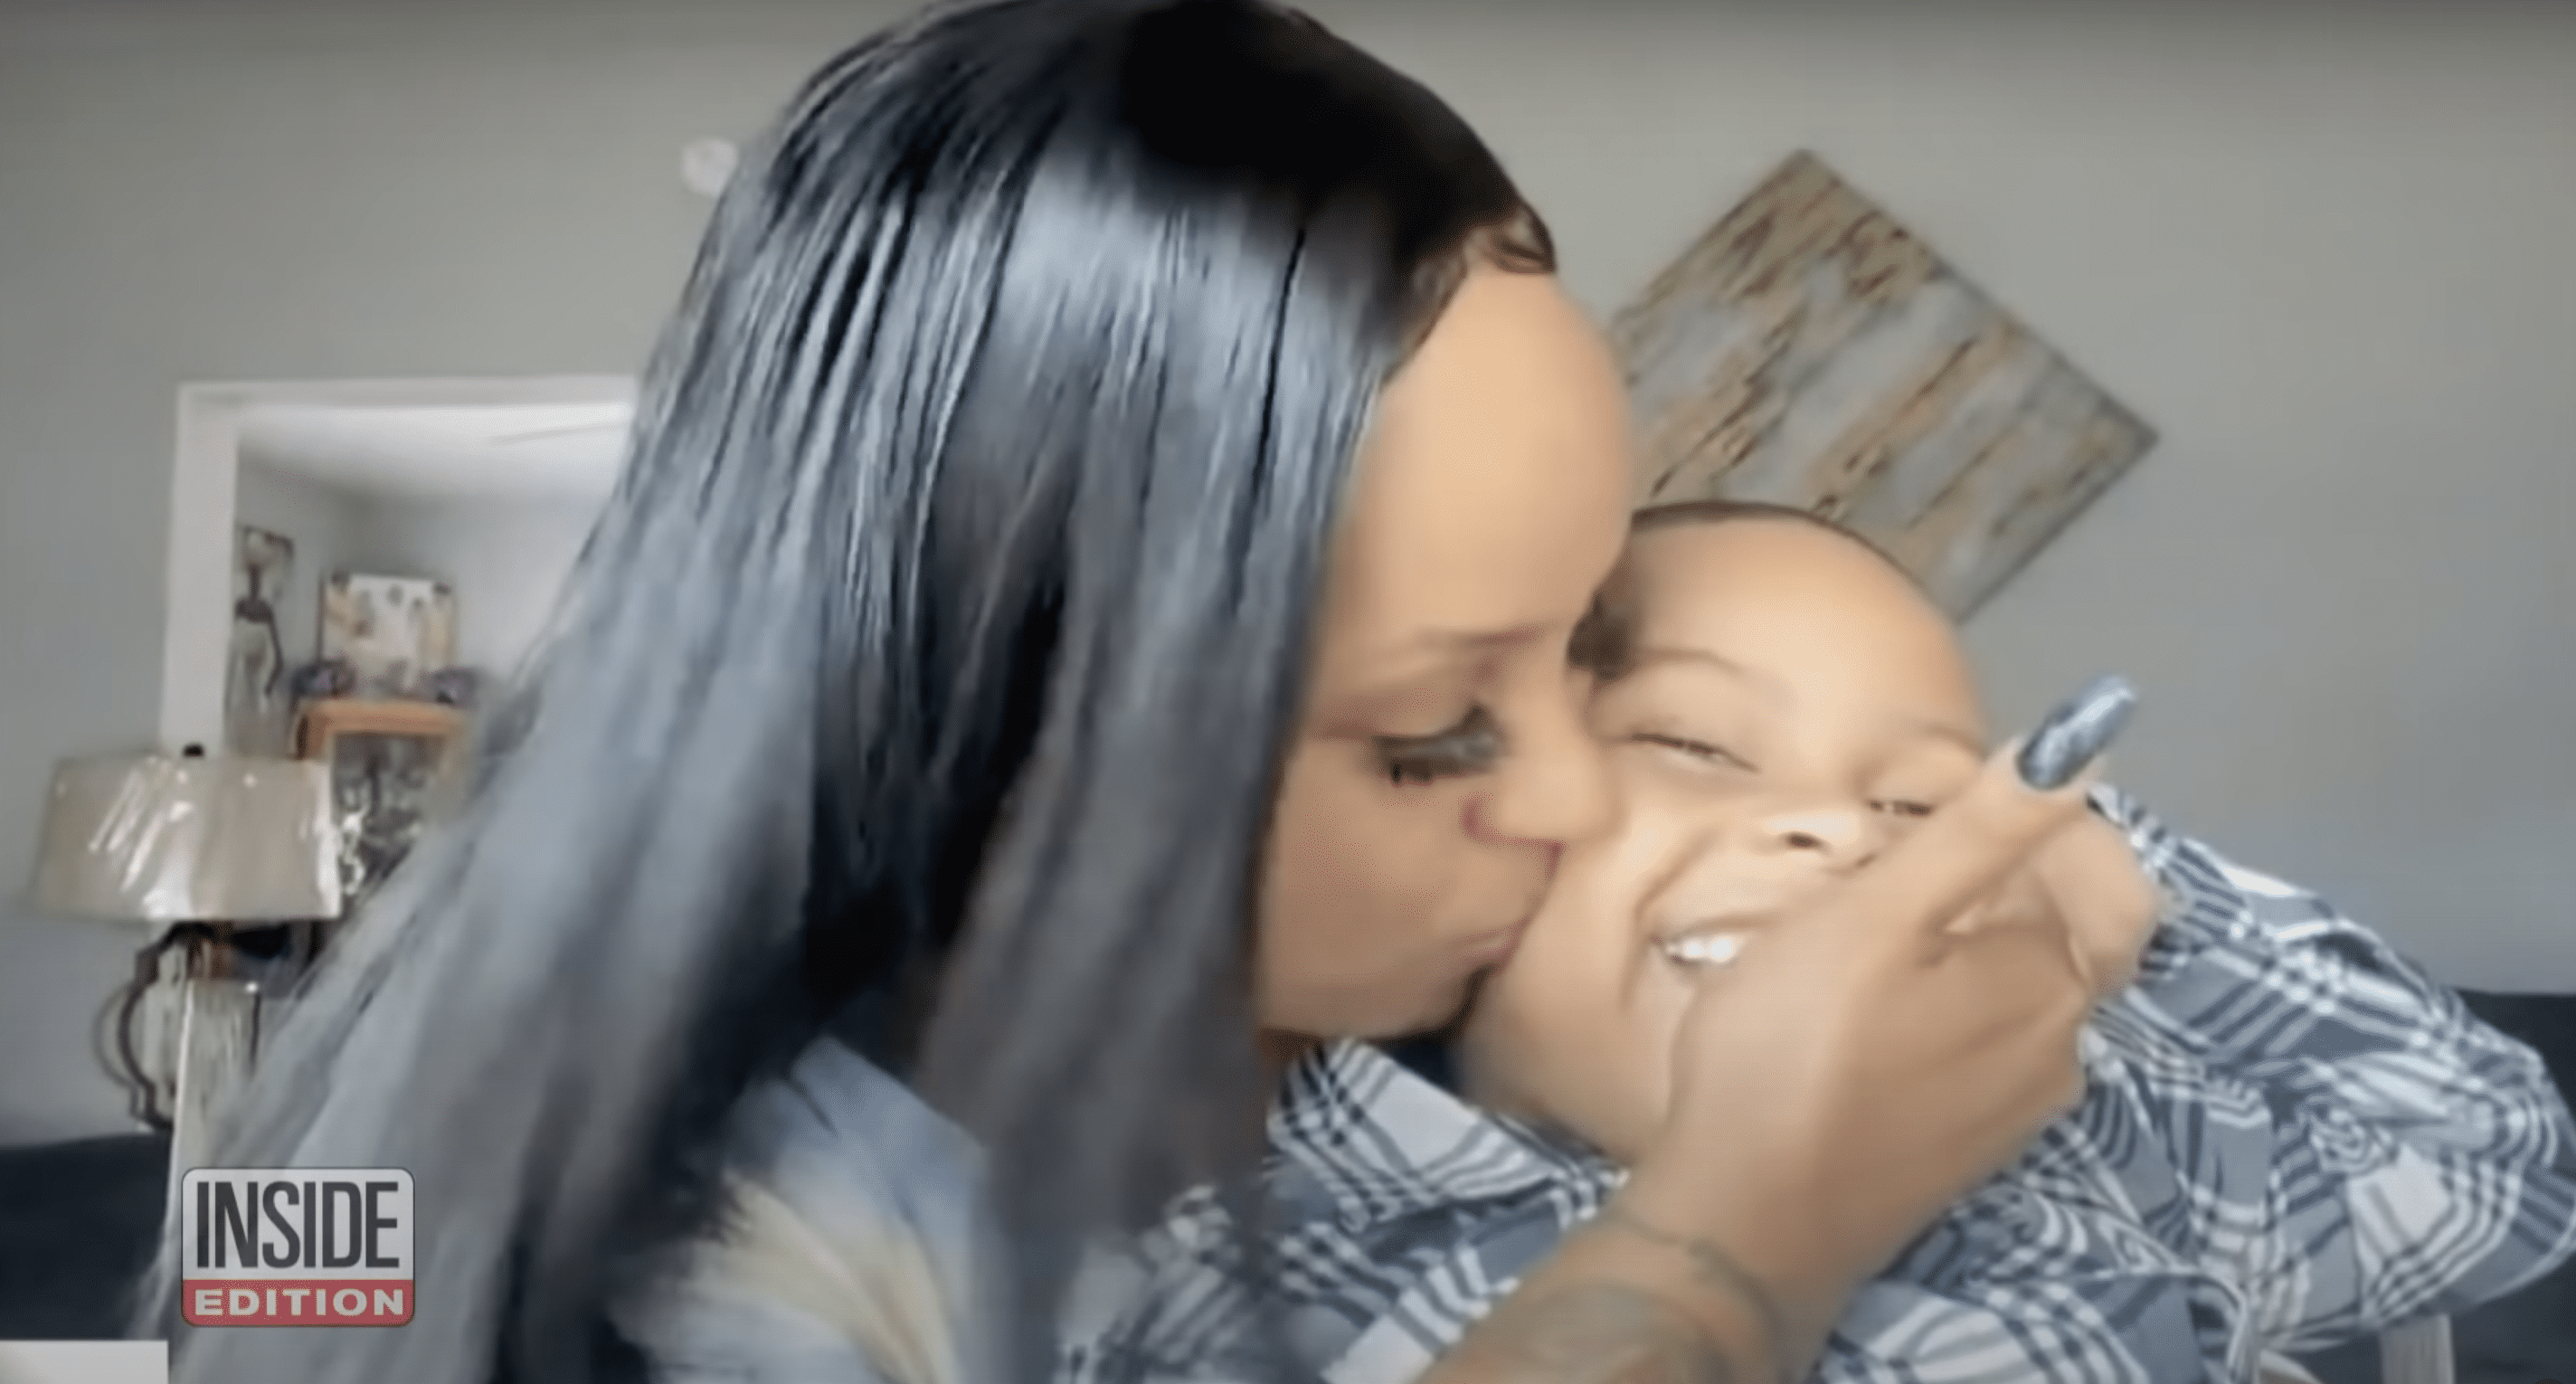 Tamika Reid küsst ihren Sohn, David Reid. | Quelle: YouTube.com/Inside Edition